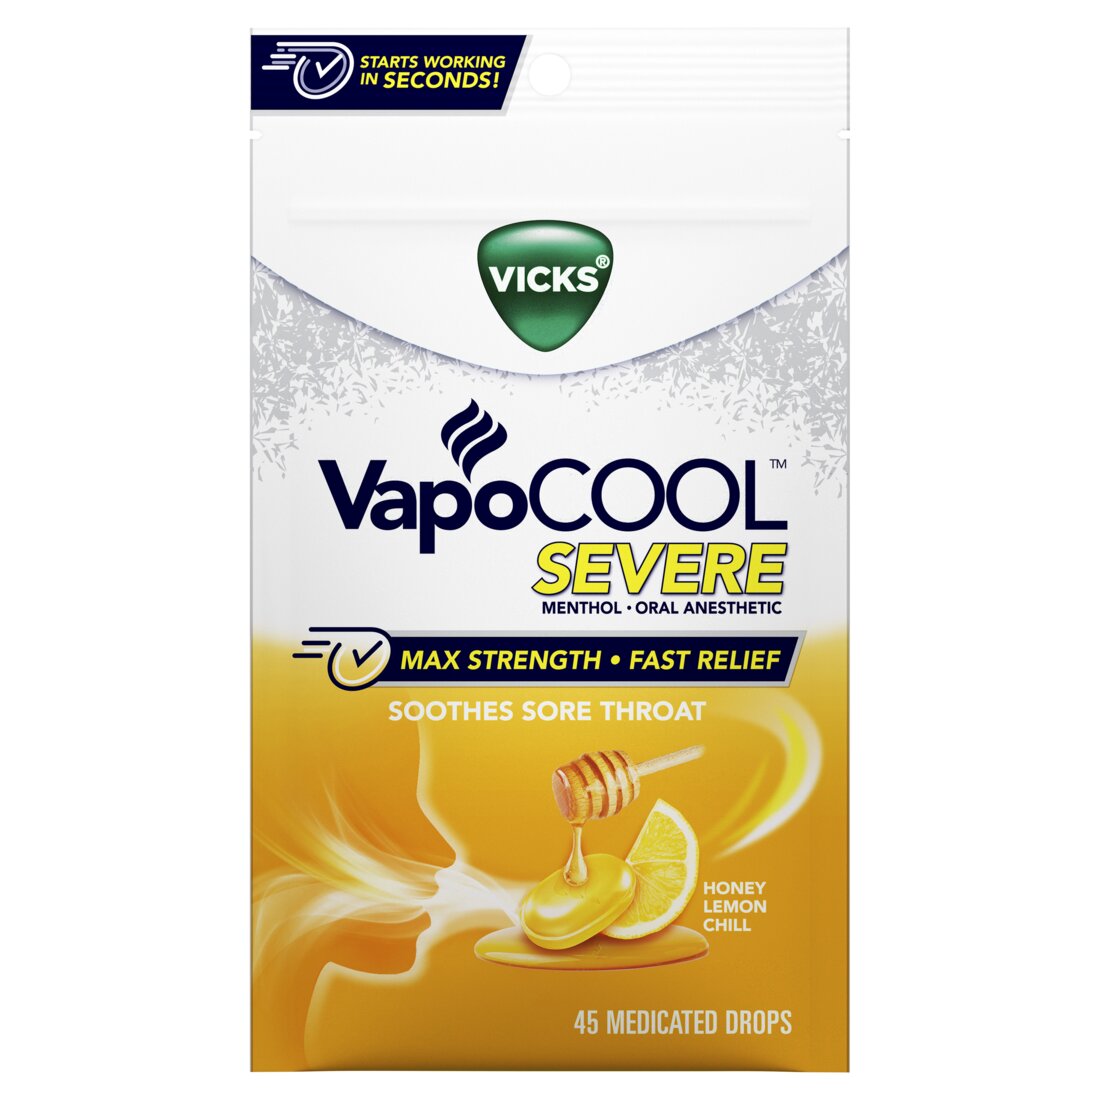 Vicks VapoCOOL SEVERE Medicated Sore Throat Drops Fast-Acting Max Strength Honey Lemon Chill - 18ct/9pk